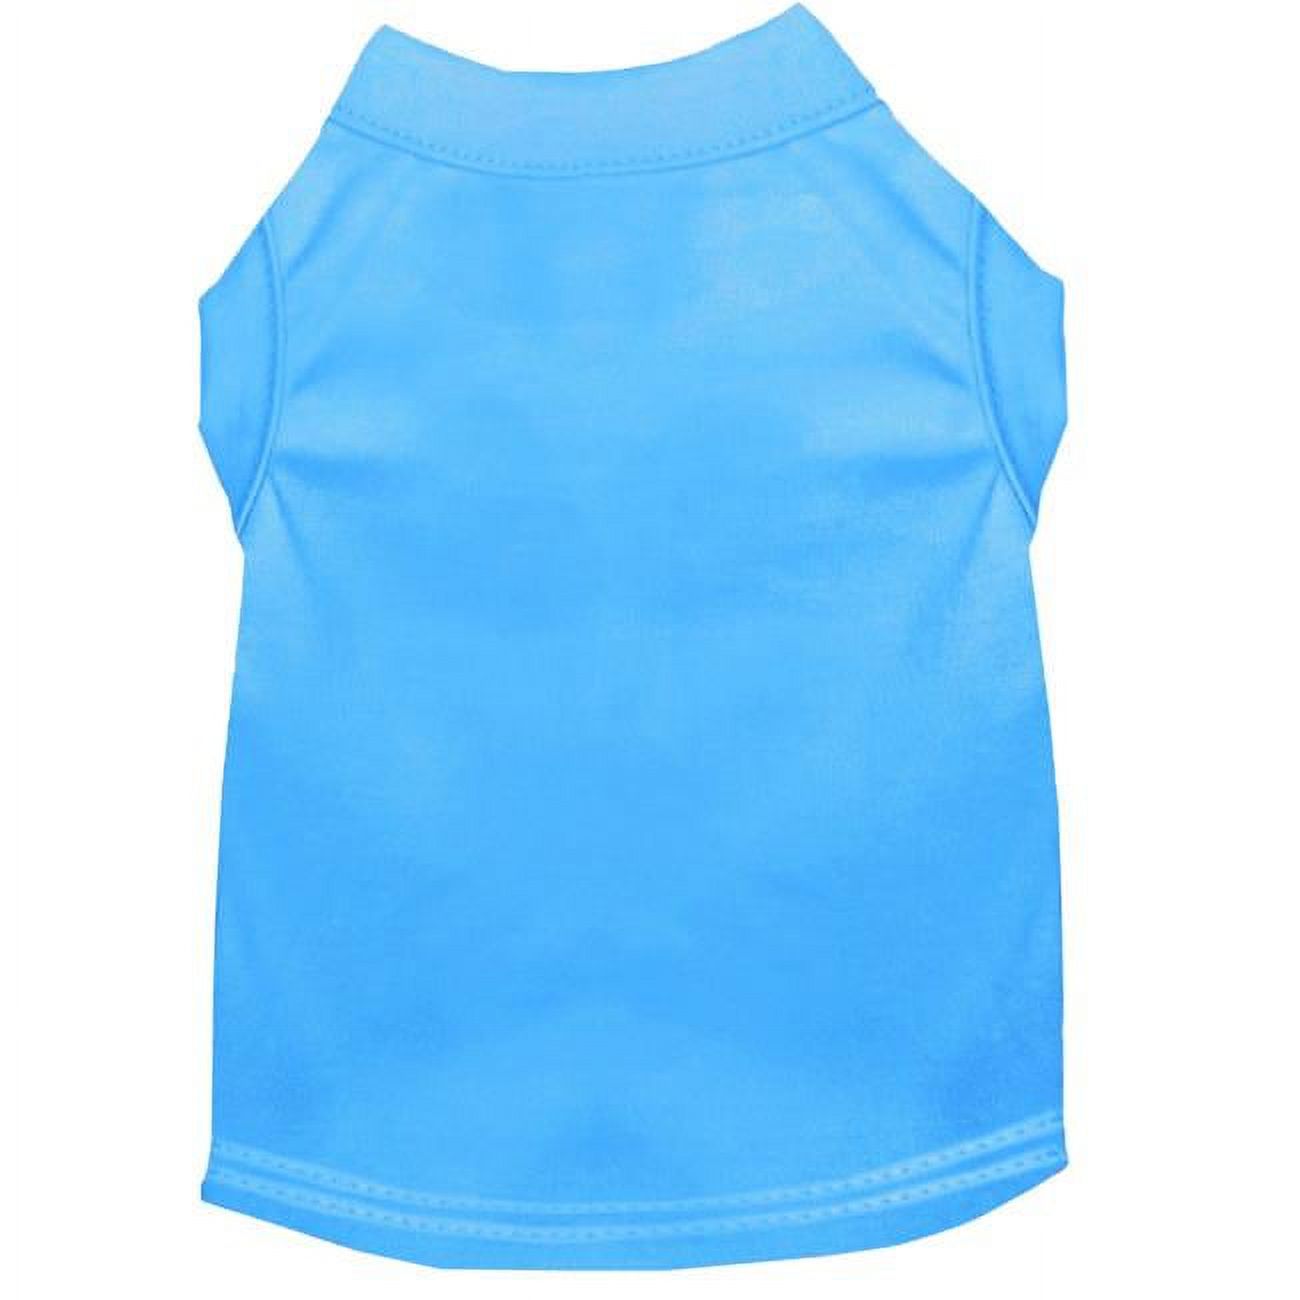 Mirage Pet Plain Pet Shirts Bermuda Blue XL - image 1 of 5